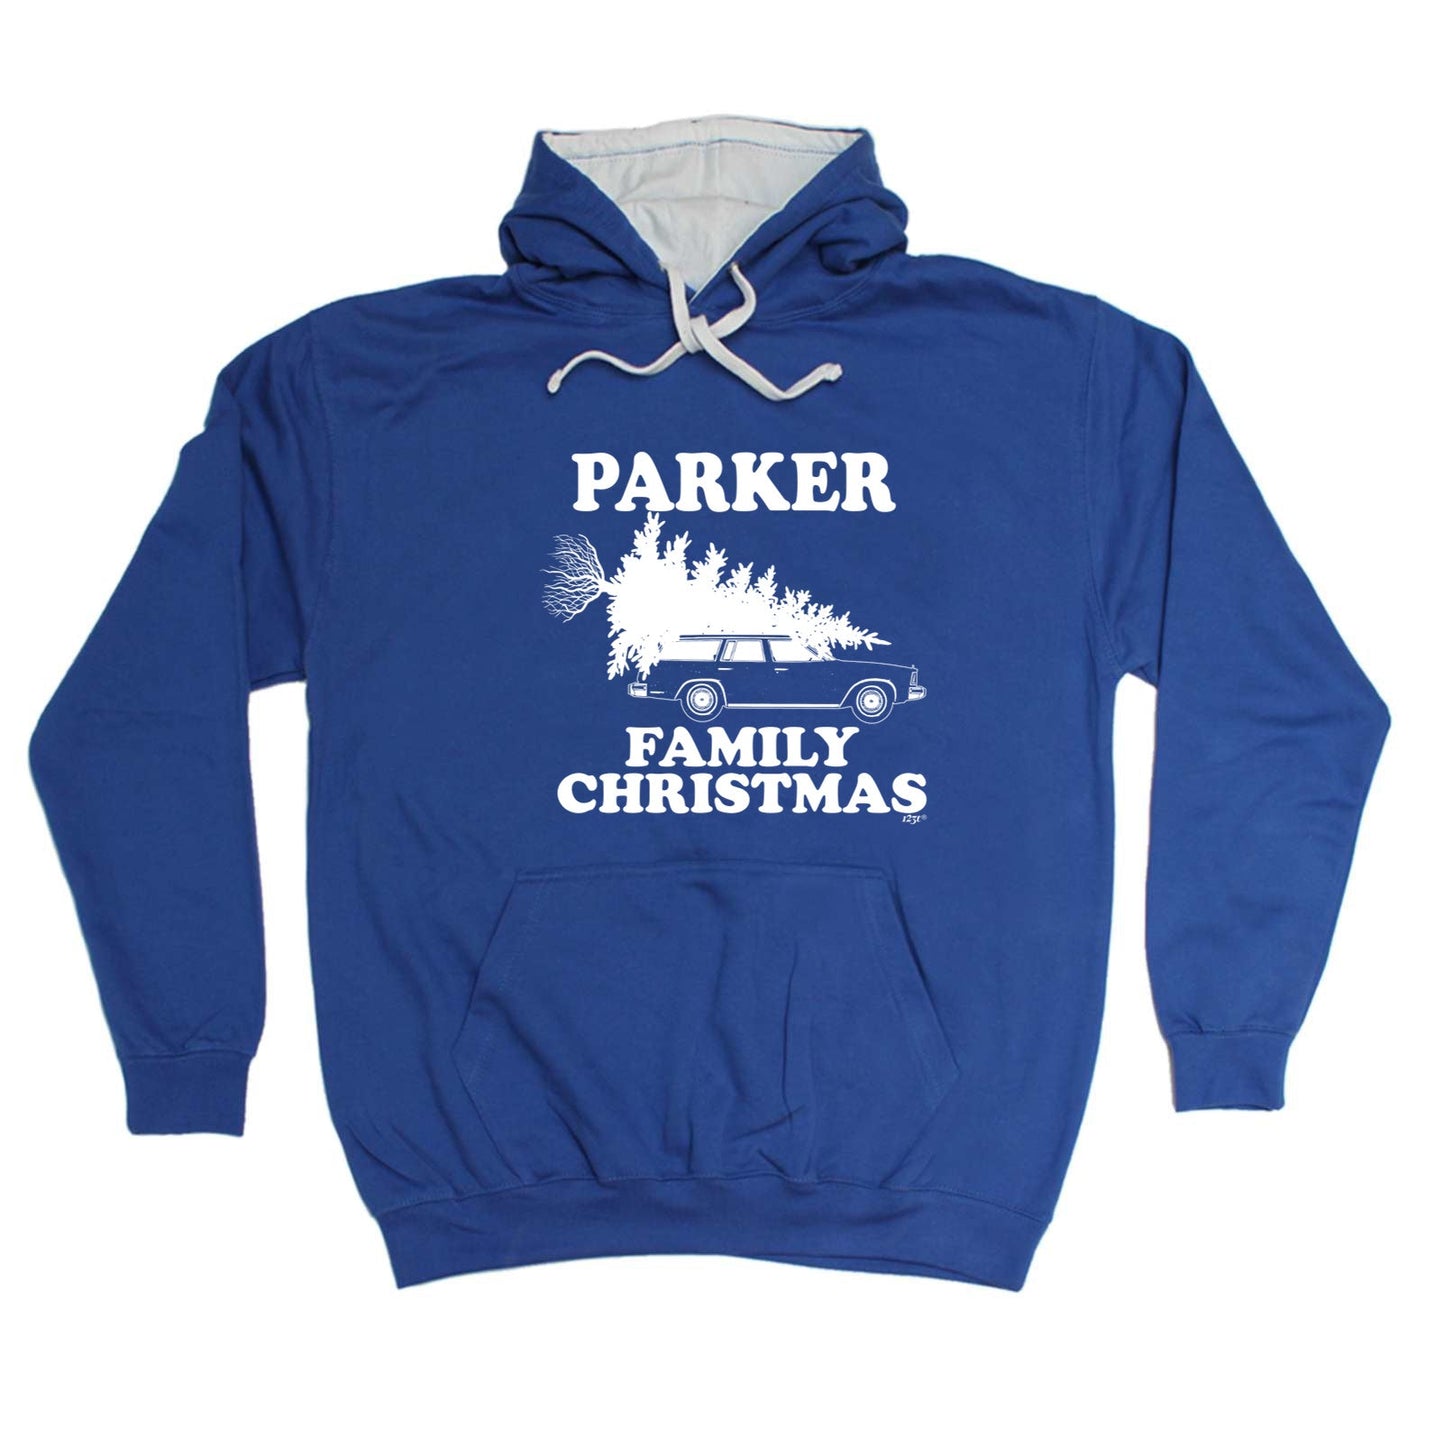 Family Christmas Parker - Xmas Novelty Hoodies Hoodie